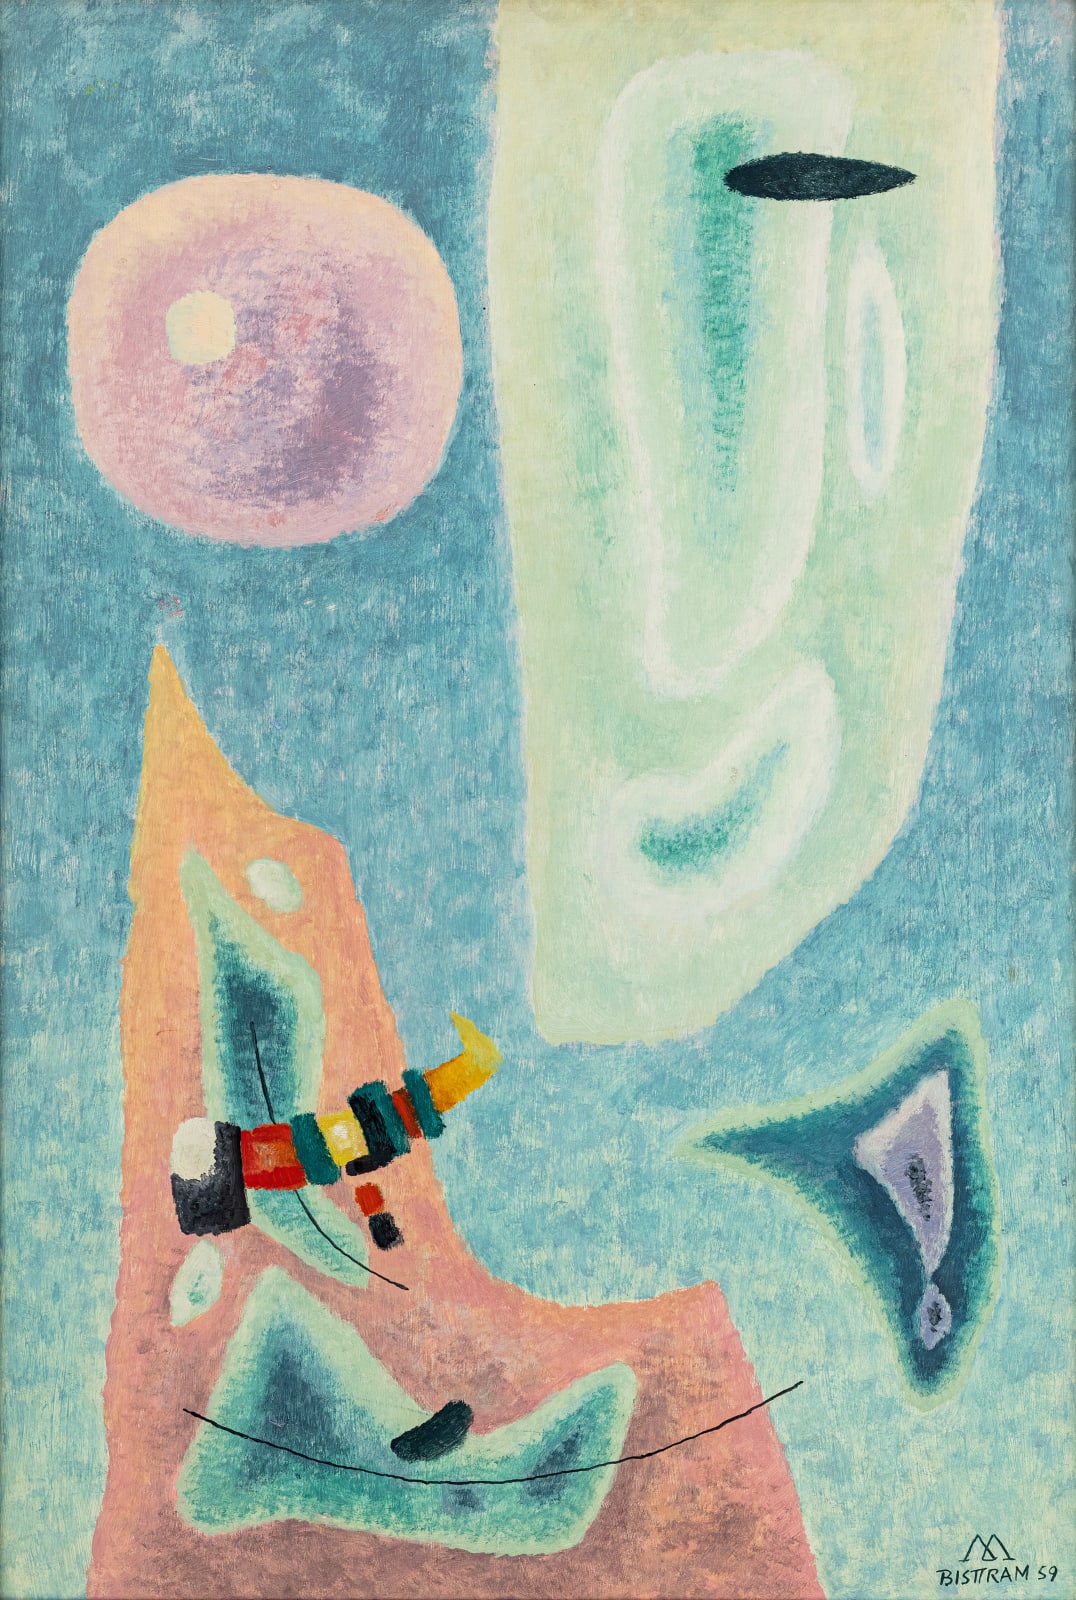 Emil Bisttram, Toward the Heavens, 1959